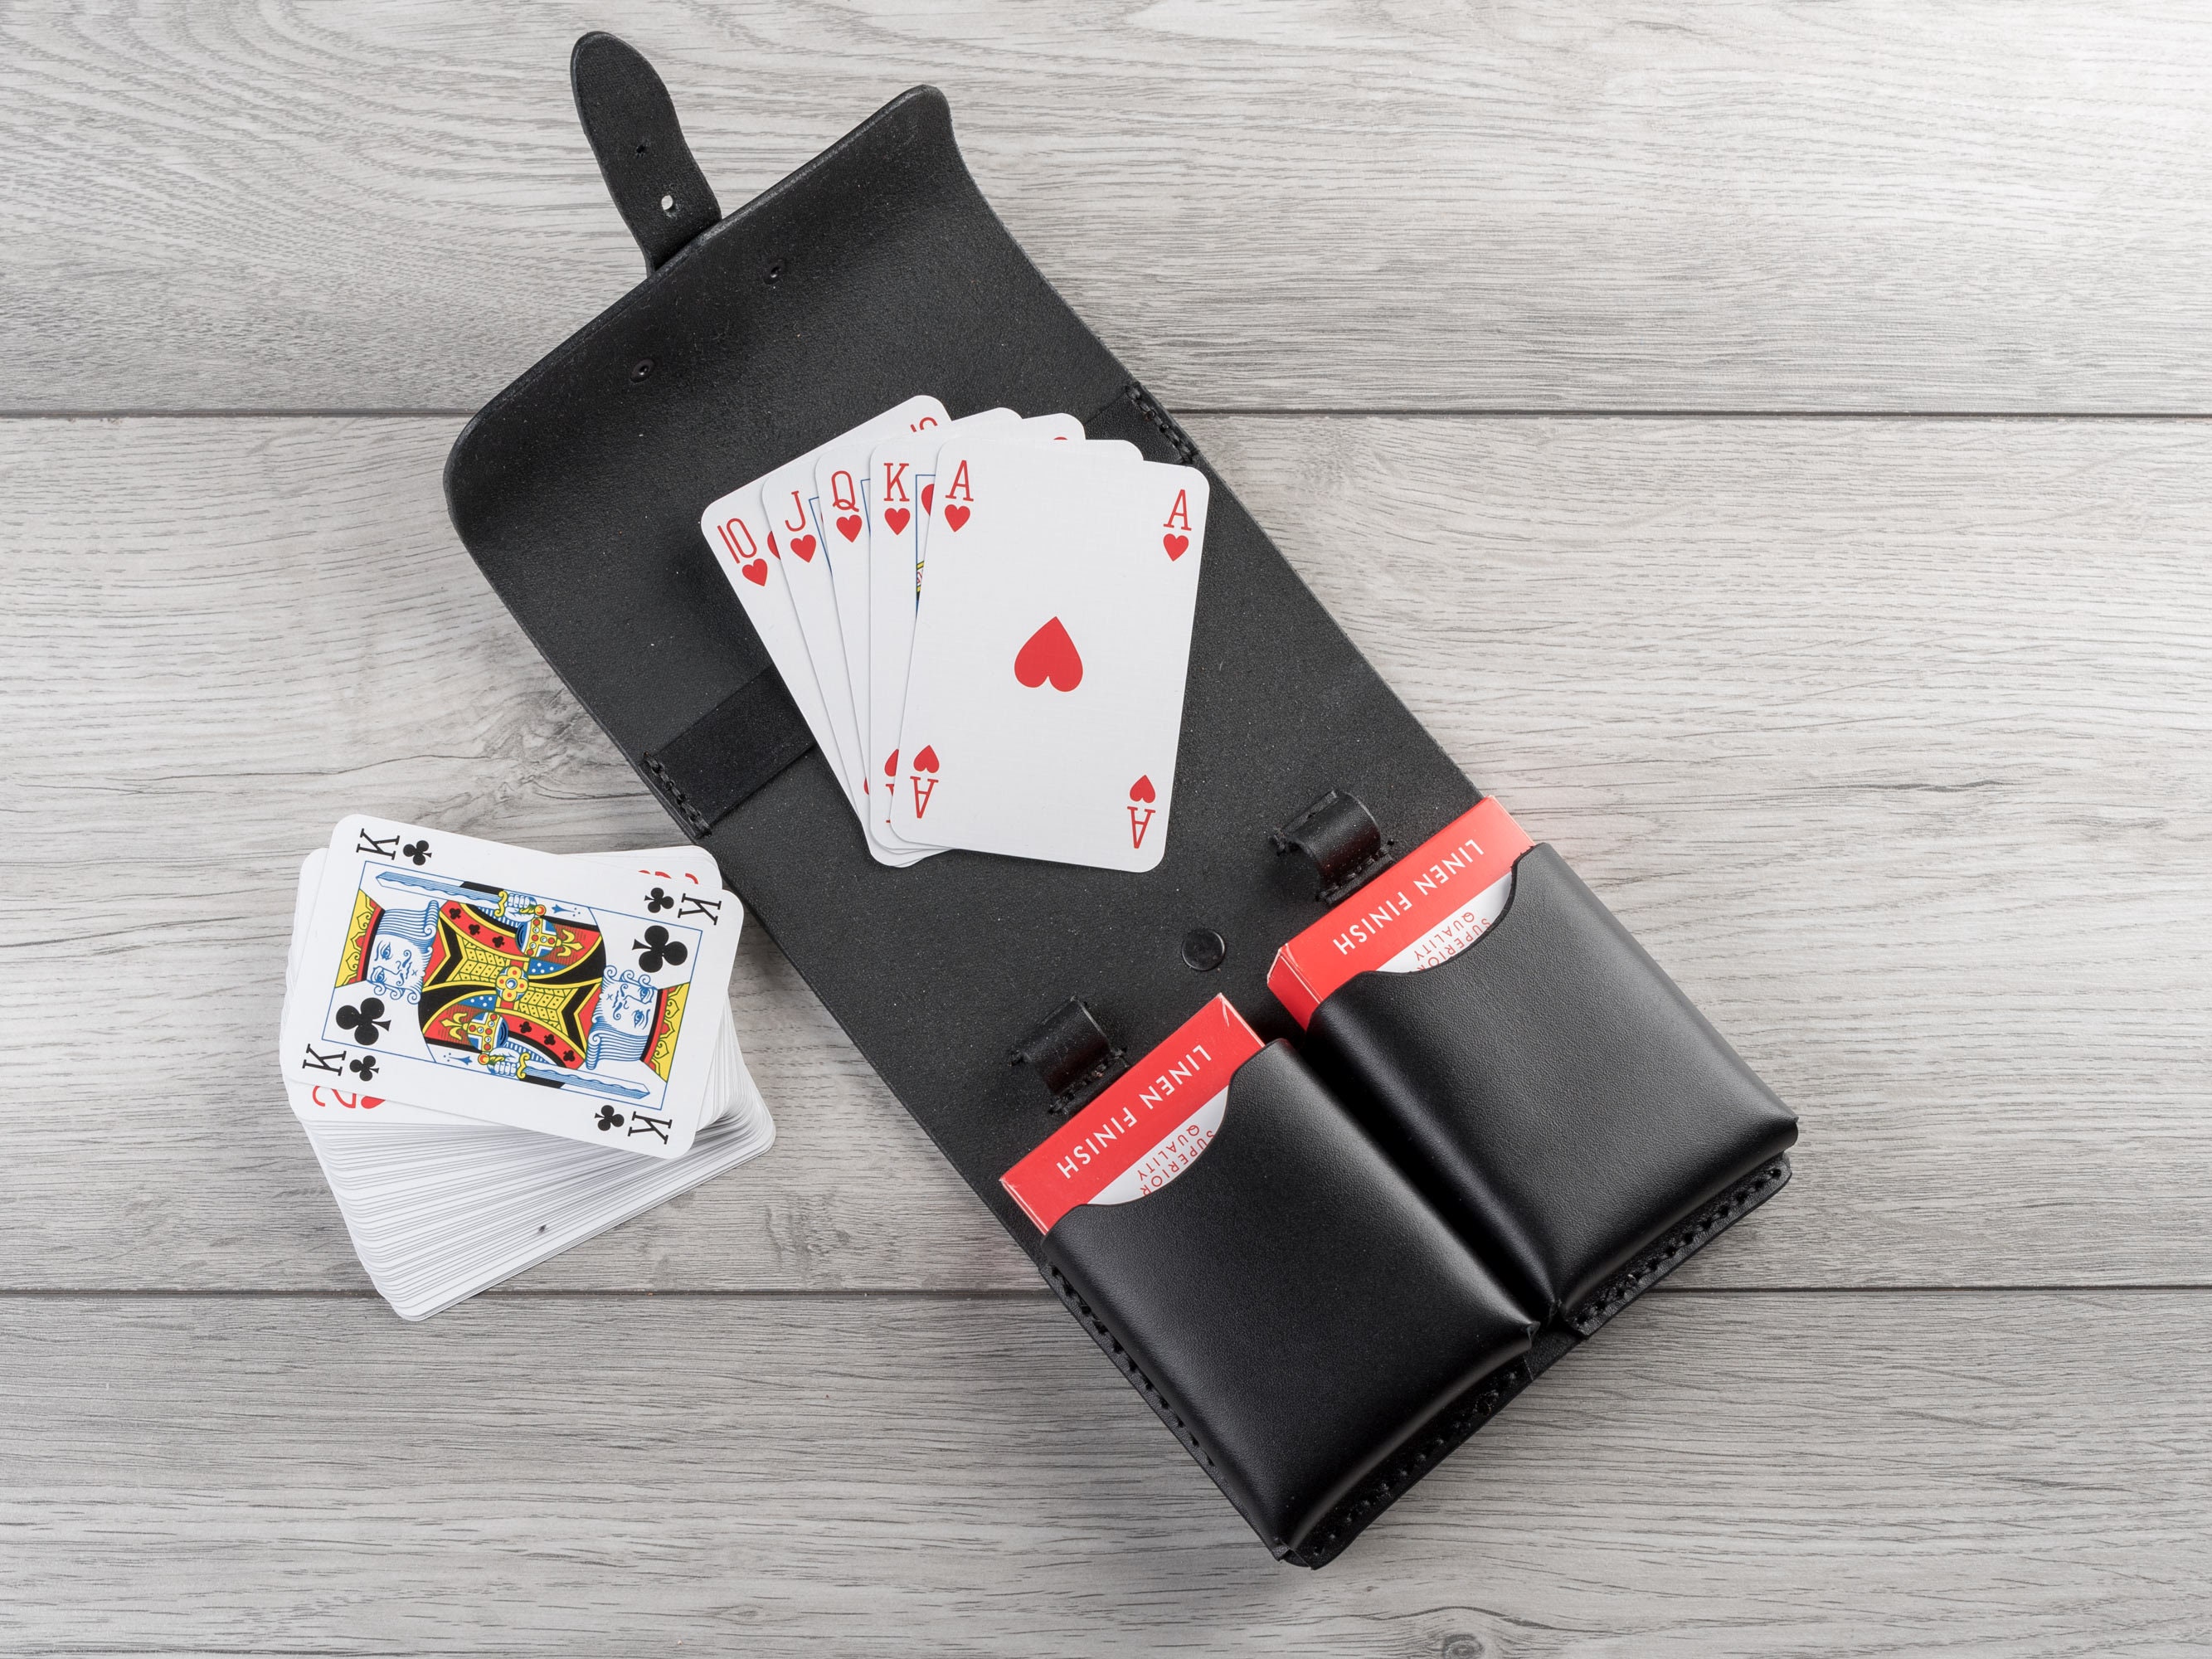 NEW Louis Vuitton Card Deck Set Poker Bridge Game Cards 3 Sets at